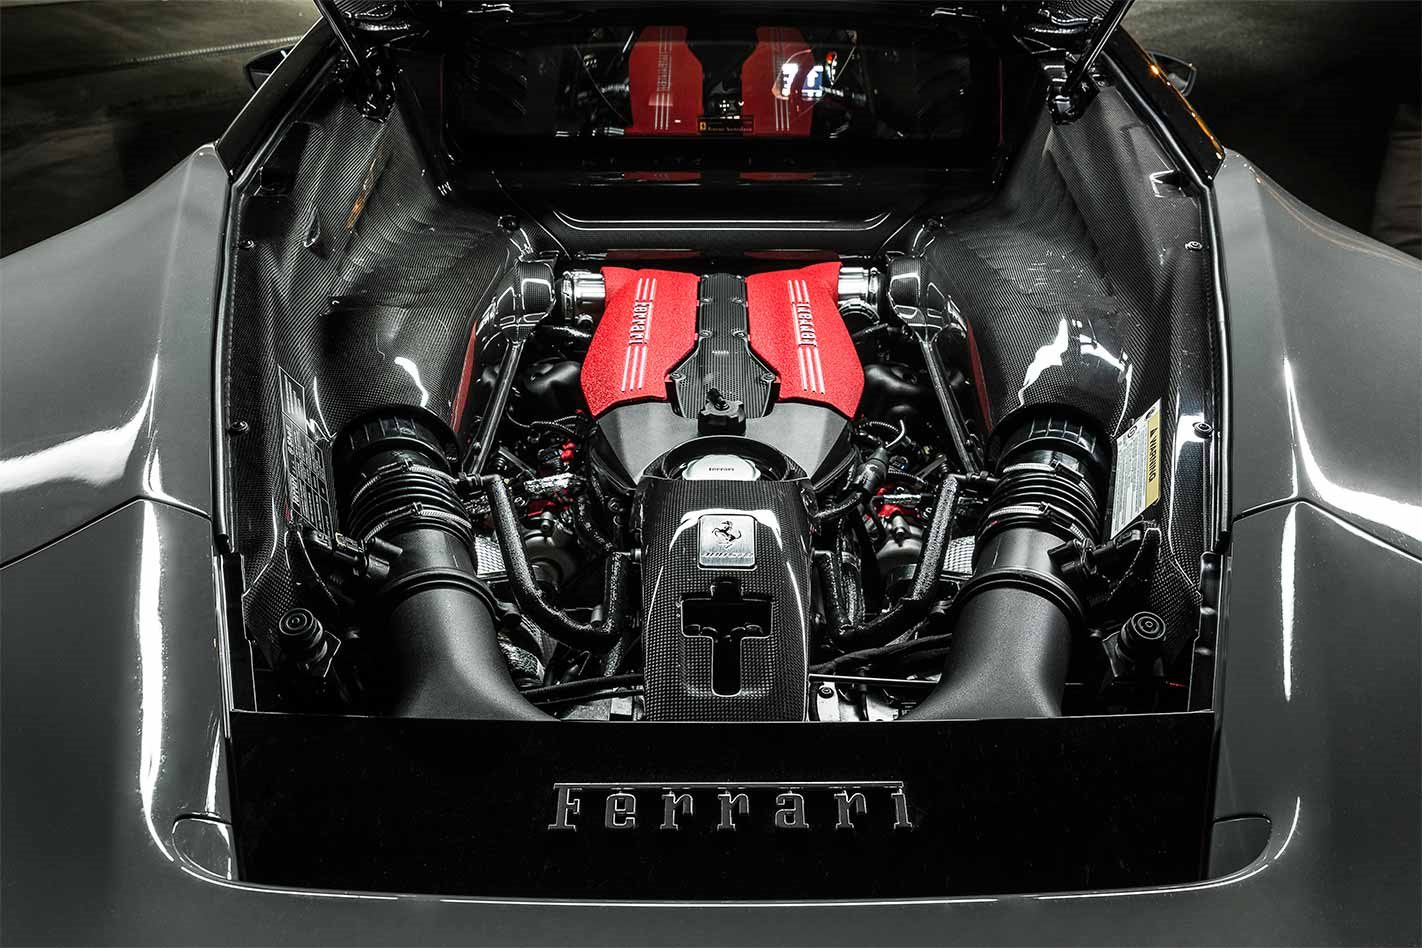 Ferrari 488 Gtb Performance Testing